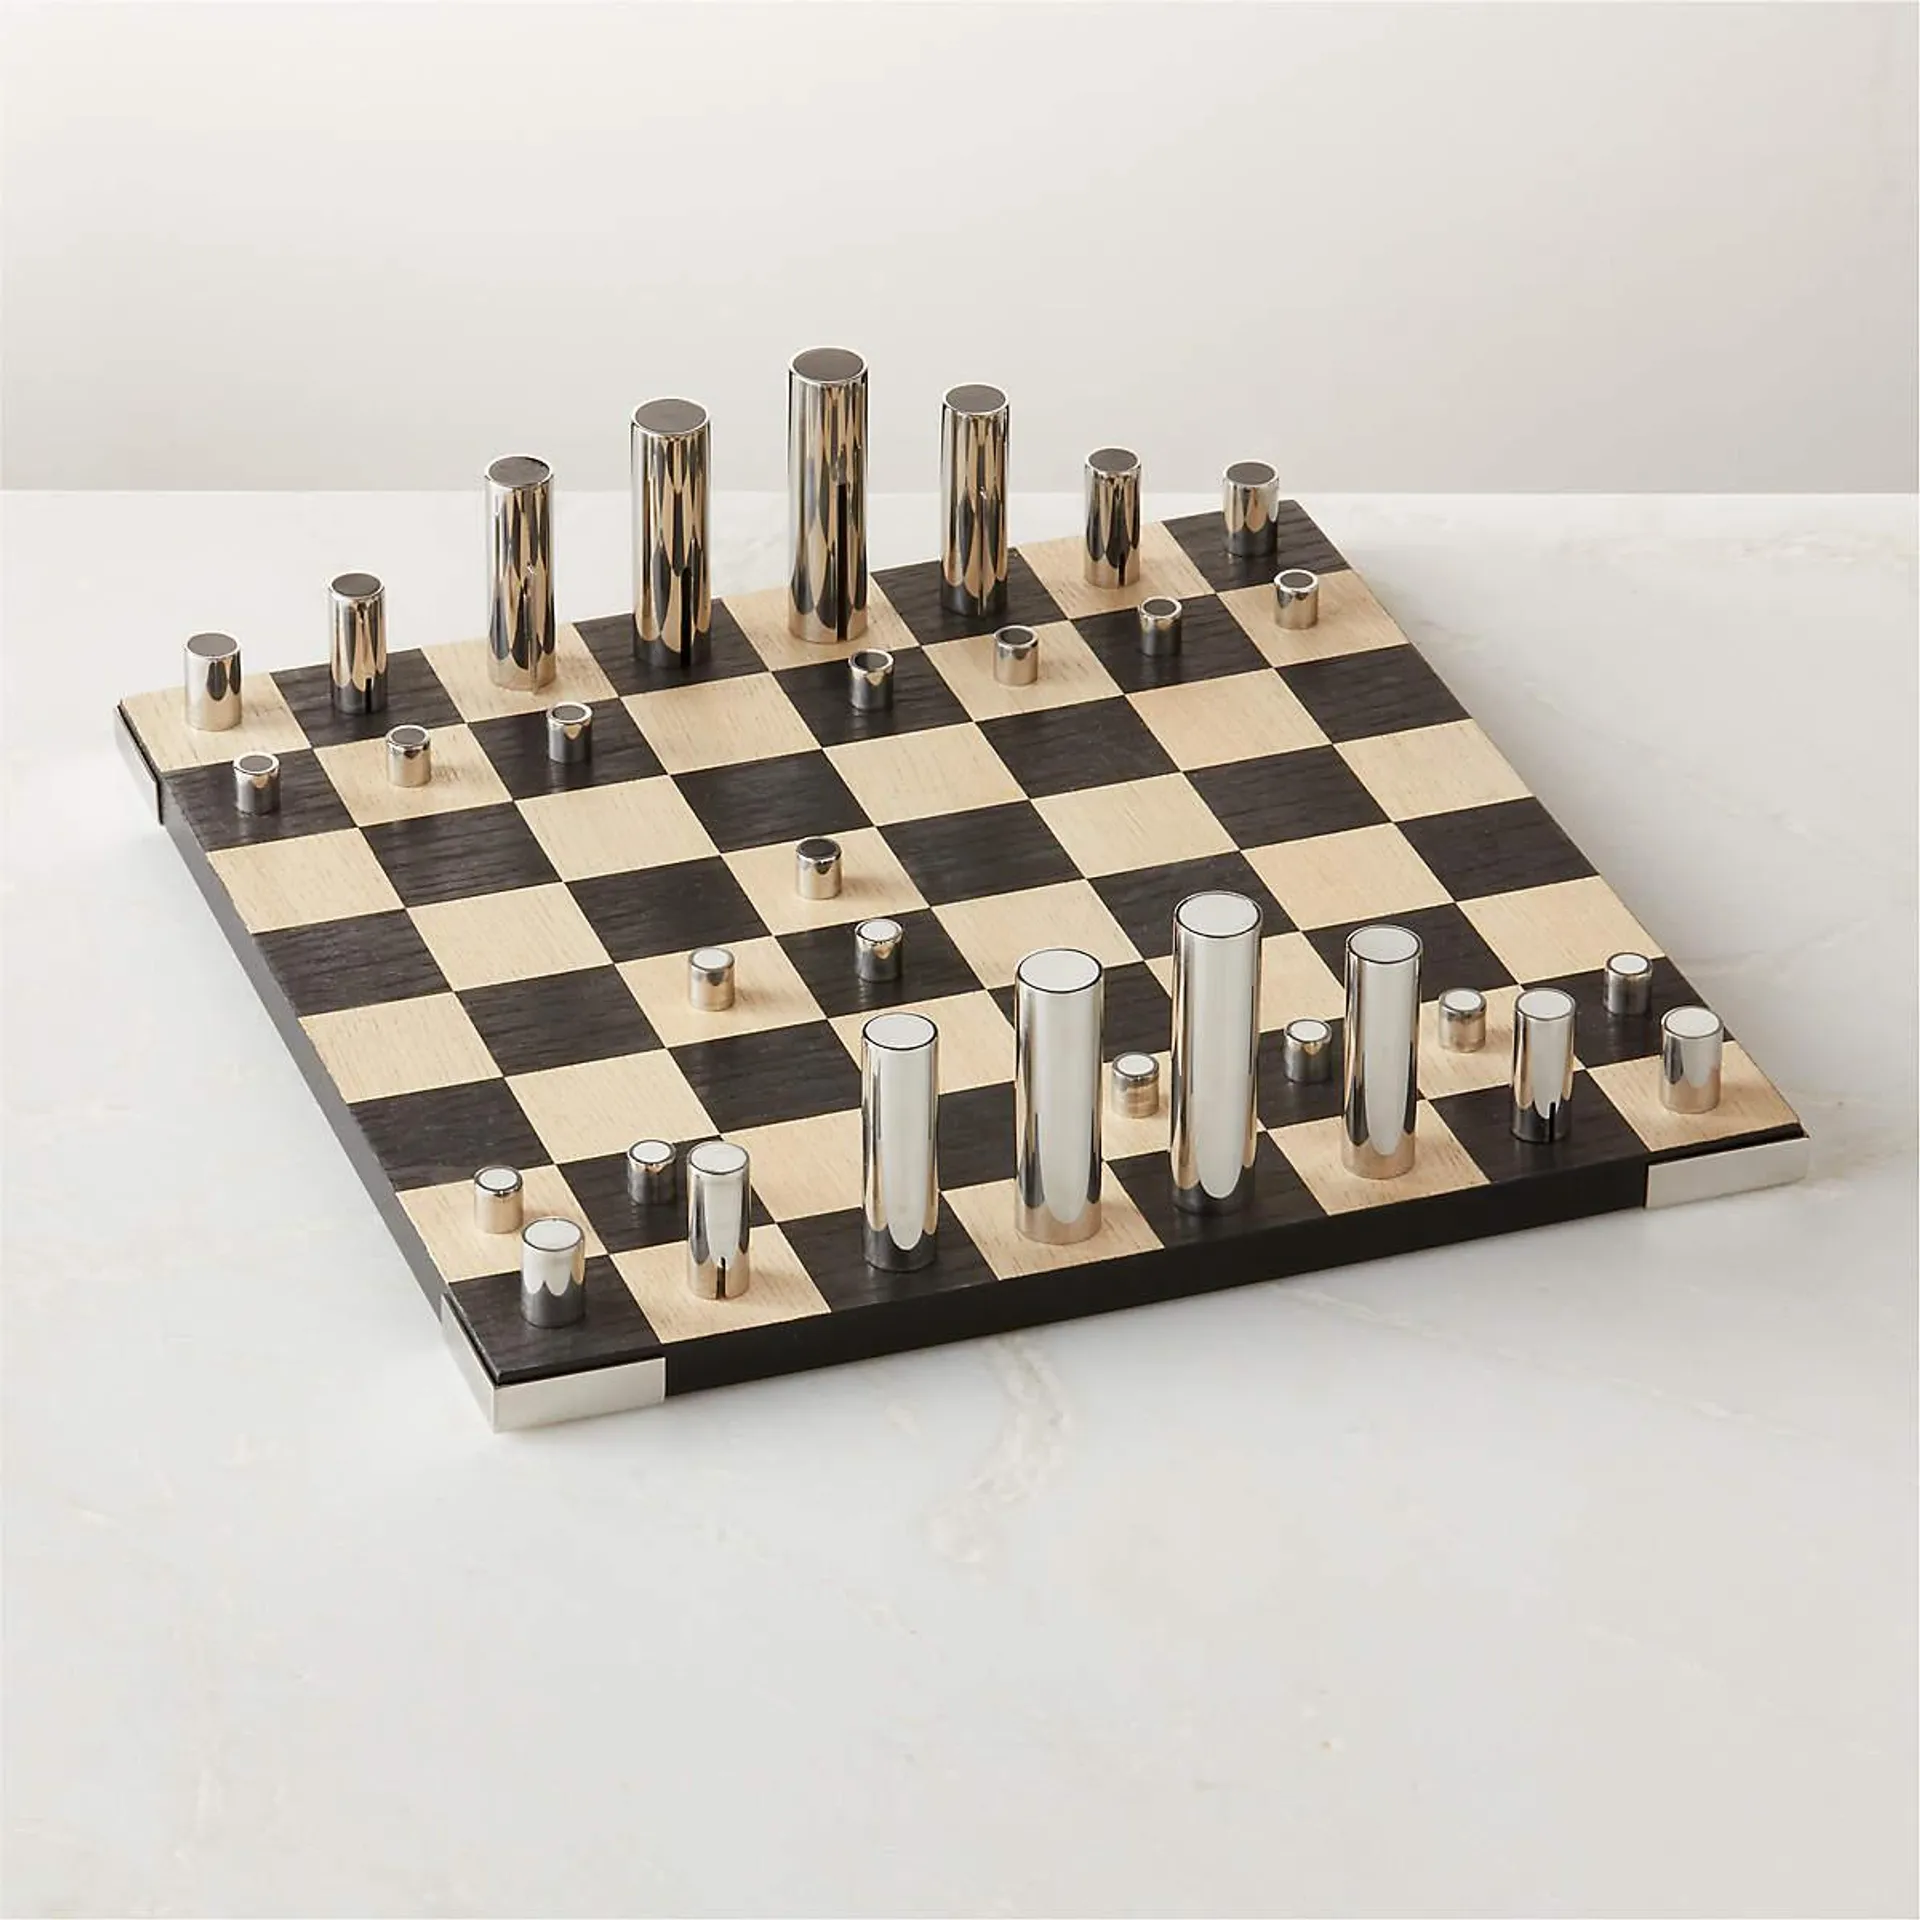 Famiglia Modern Stainless Steel Chess Set by Gianfranco Frattini